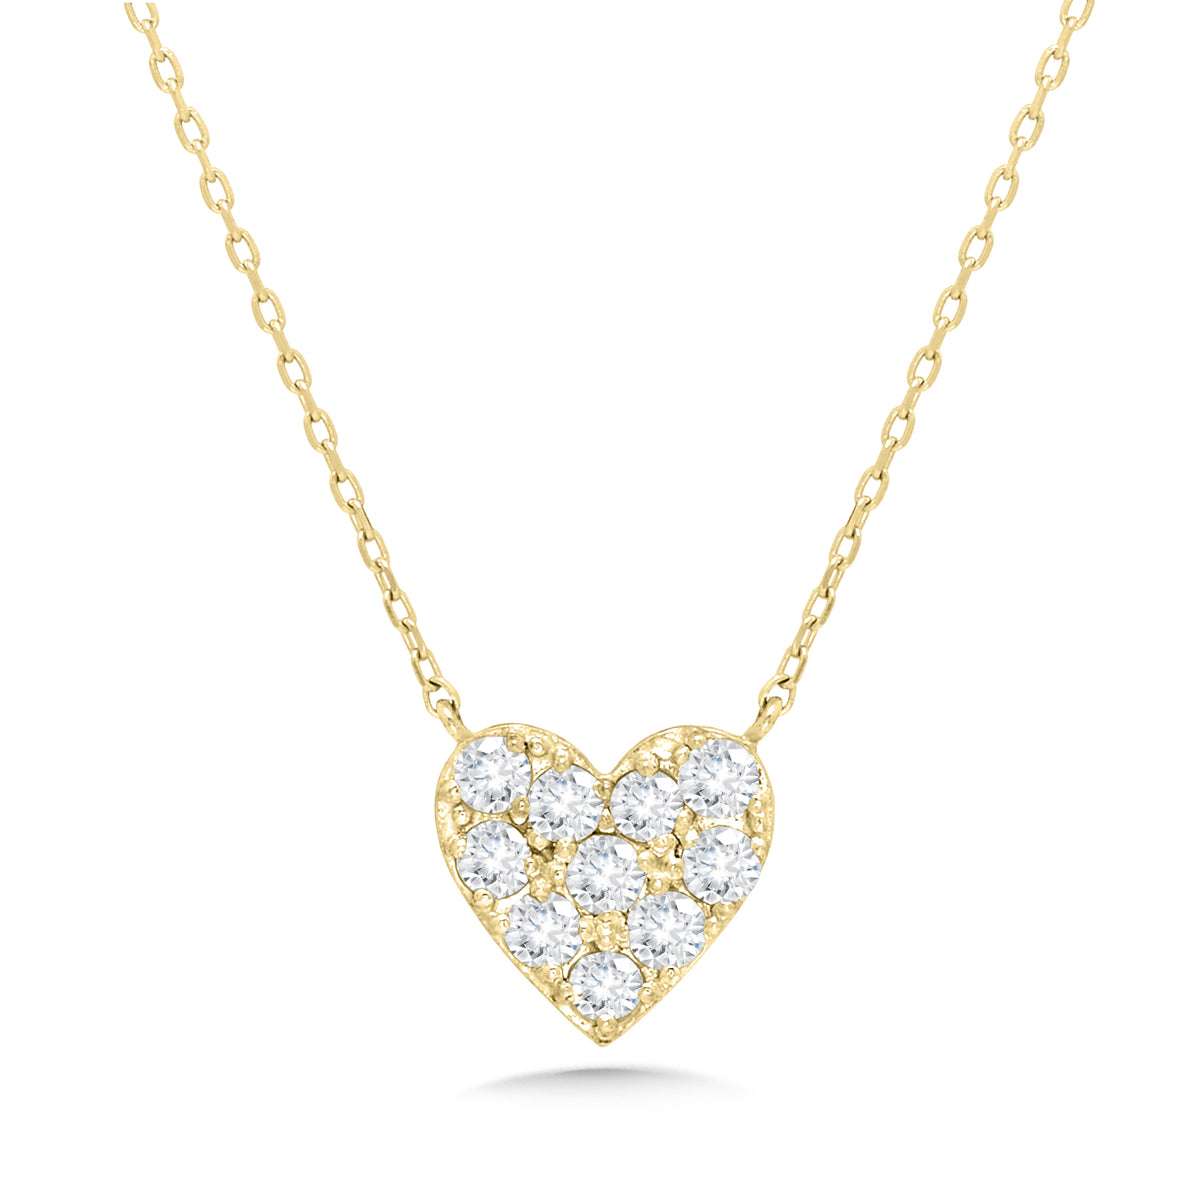 Endless Love Diamond Heart Necklace